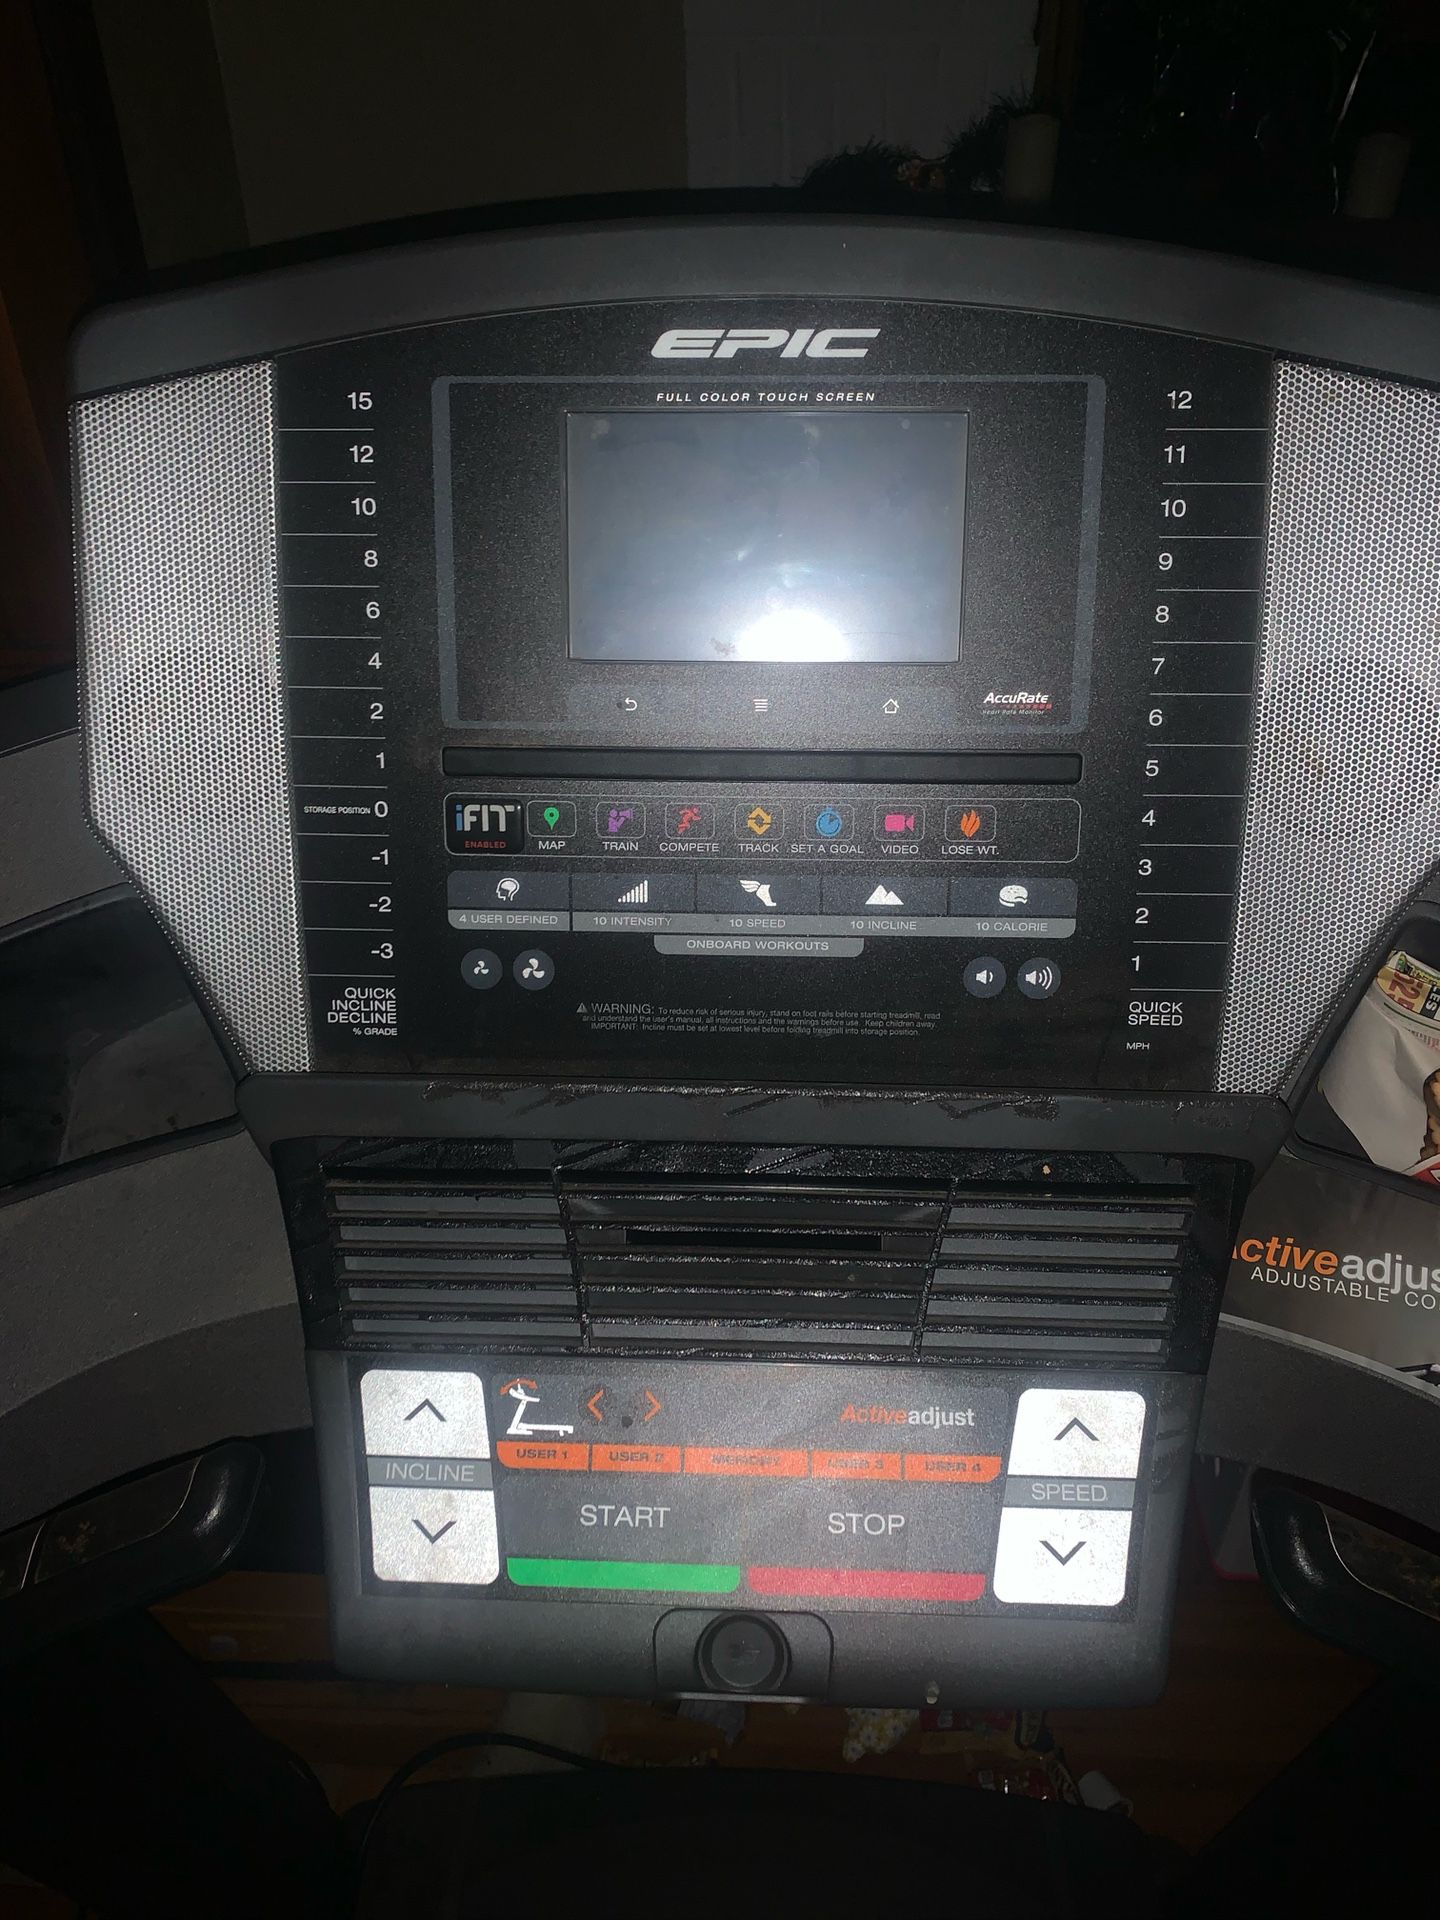 Epic treadmill